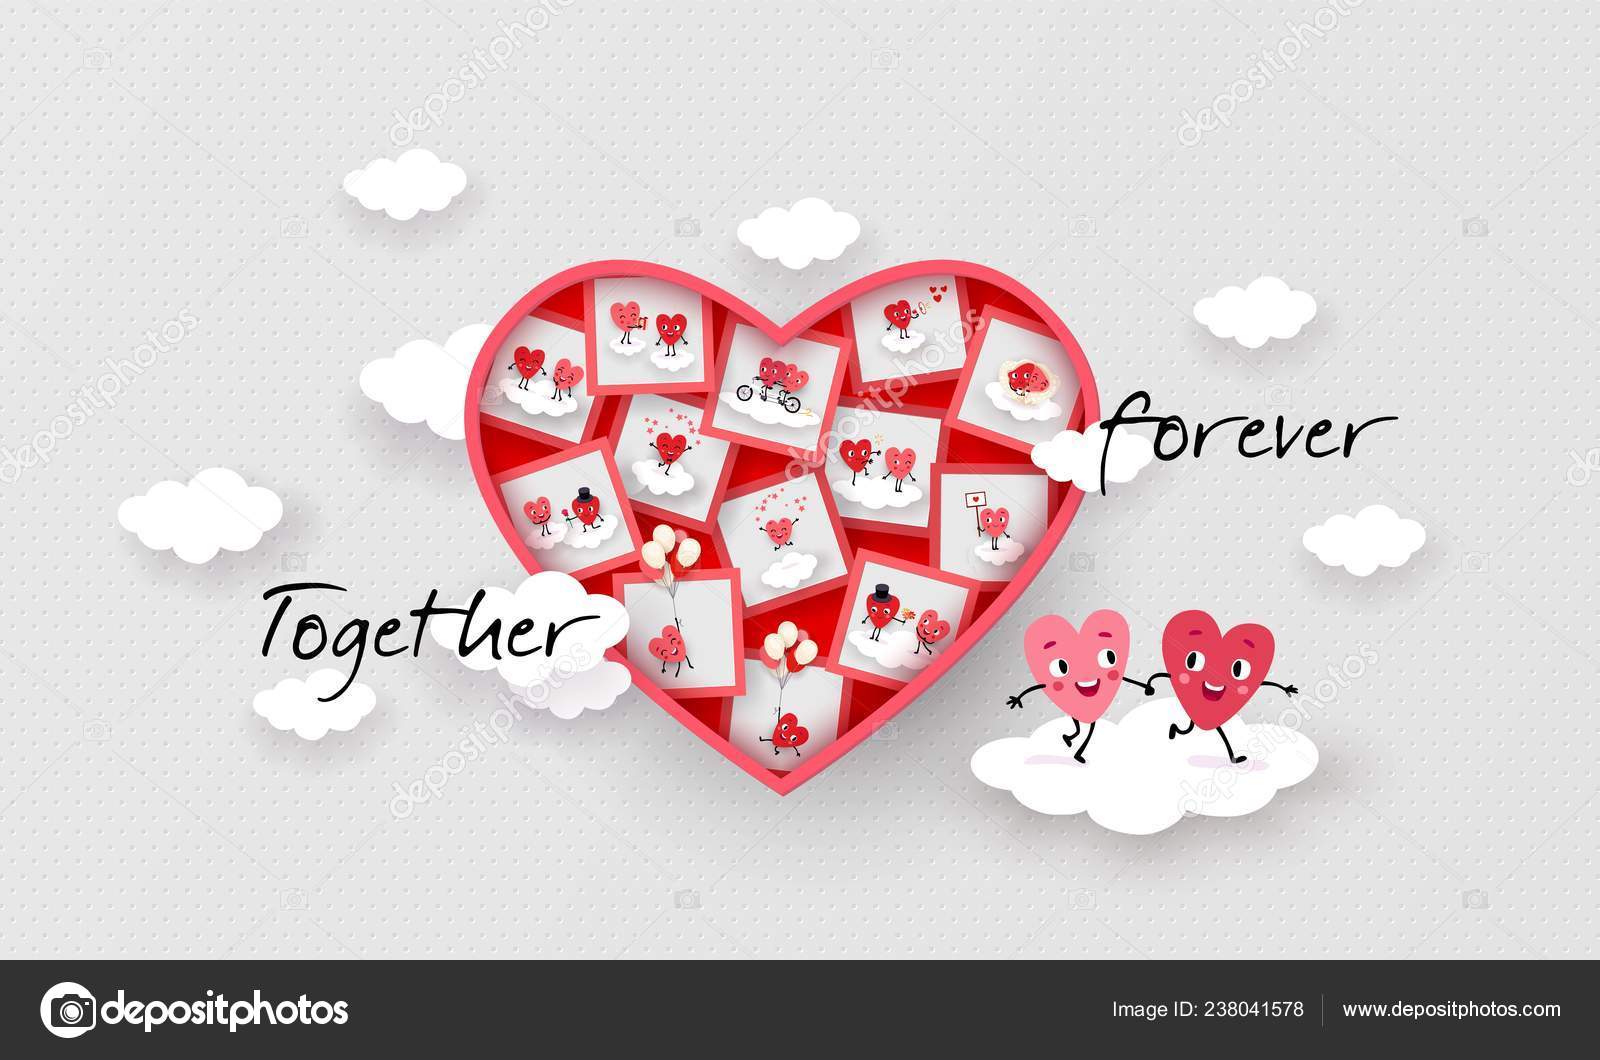 https://st4.depositphotos.com/3756875/23804/v/1600/depositphotos_238041578-stock-illustration-together-forever-love-you-declaration.jpg